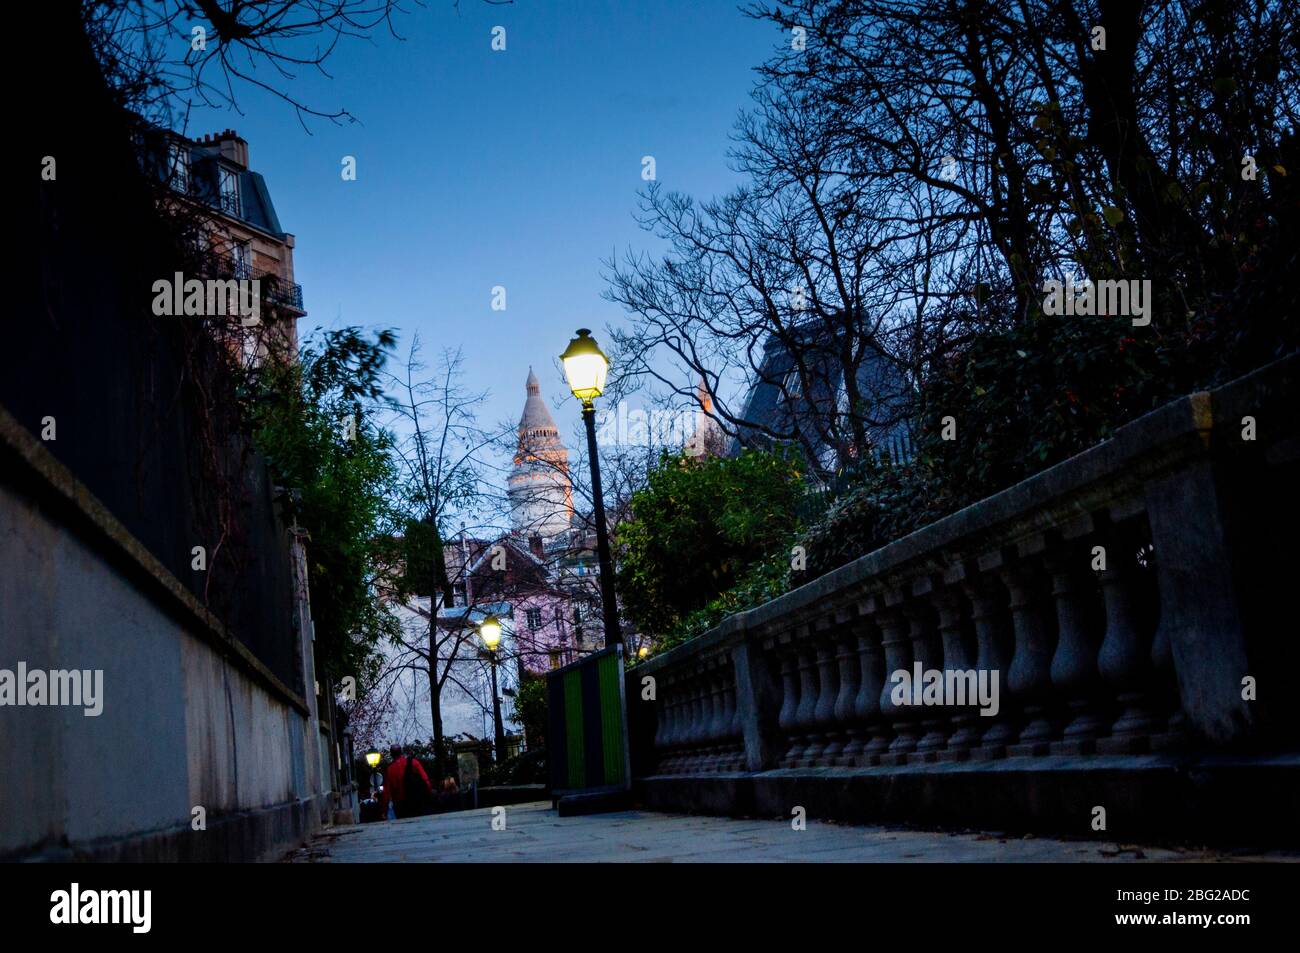 Dome and belfry of Sacré-Coeur Basilica, Montmartre, Paris, France. Stock Photo